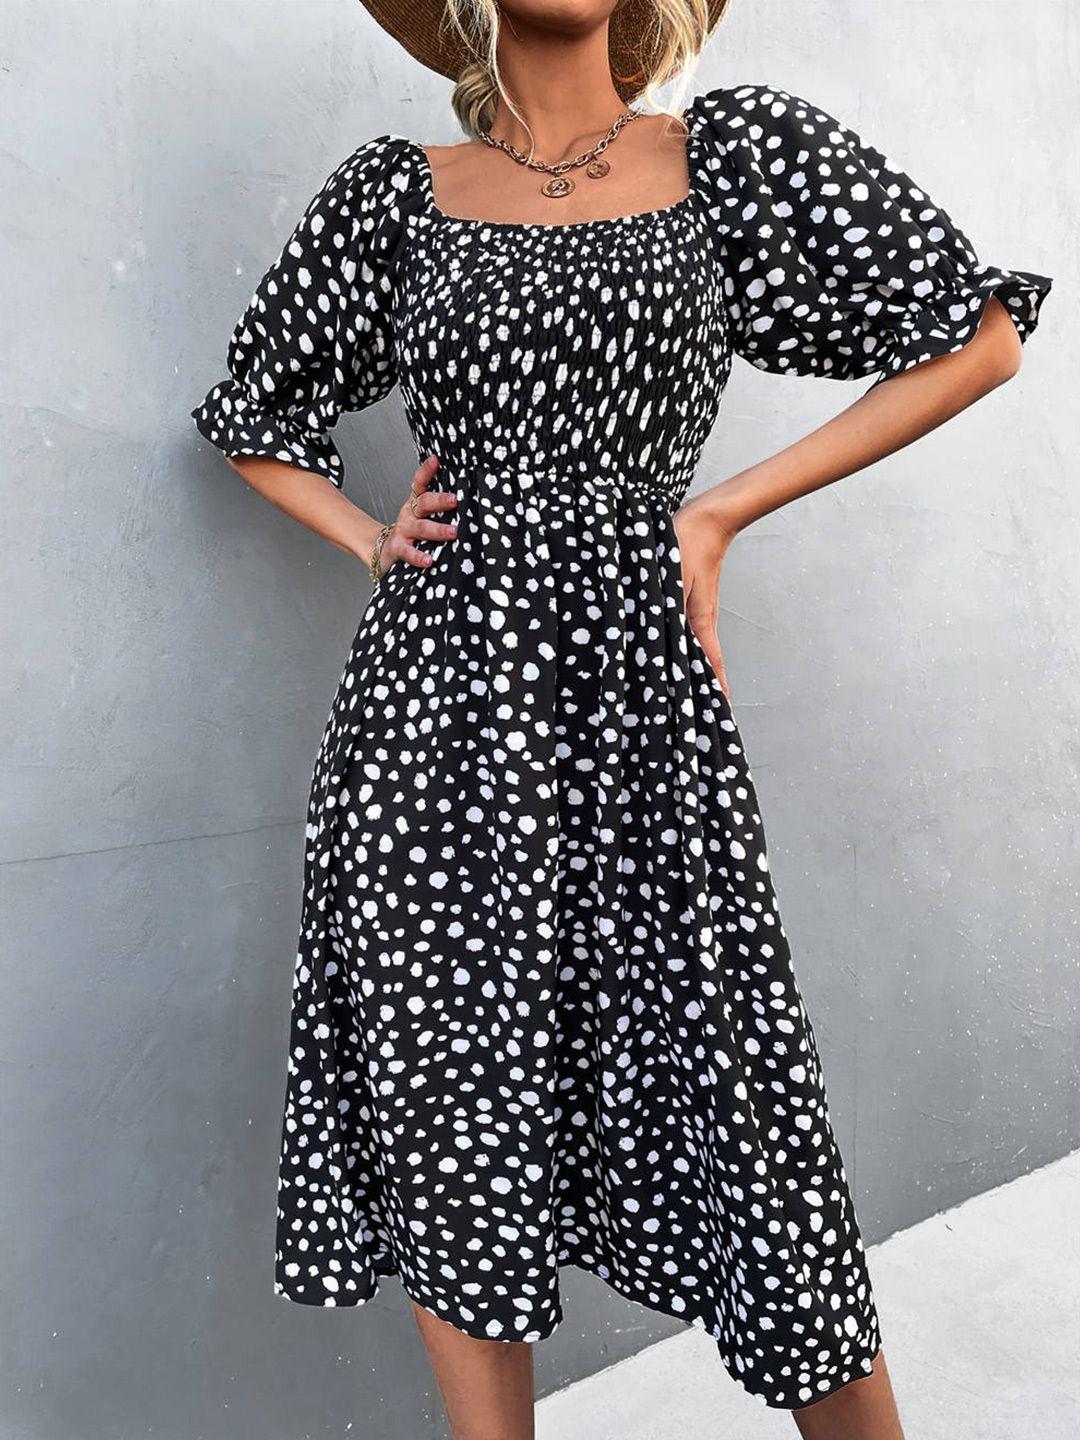 stylecast square neck bell sleeves polka dot print bodycon midi dress